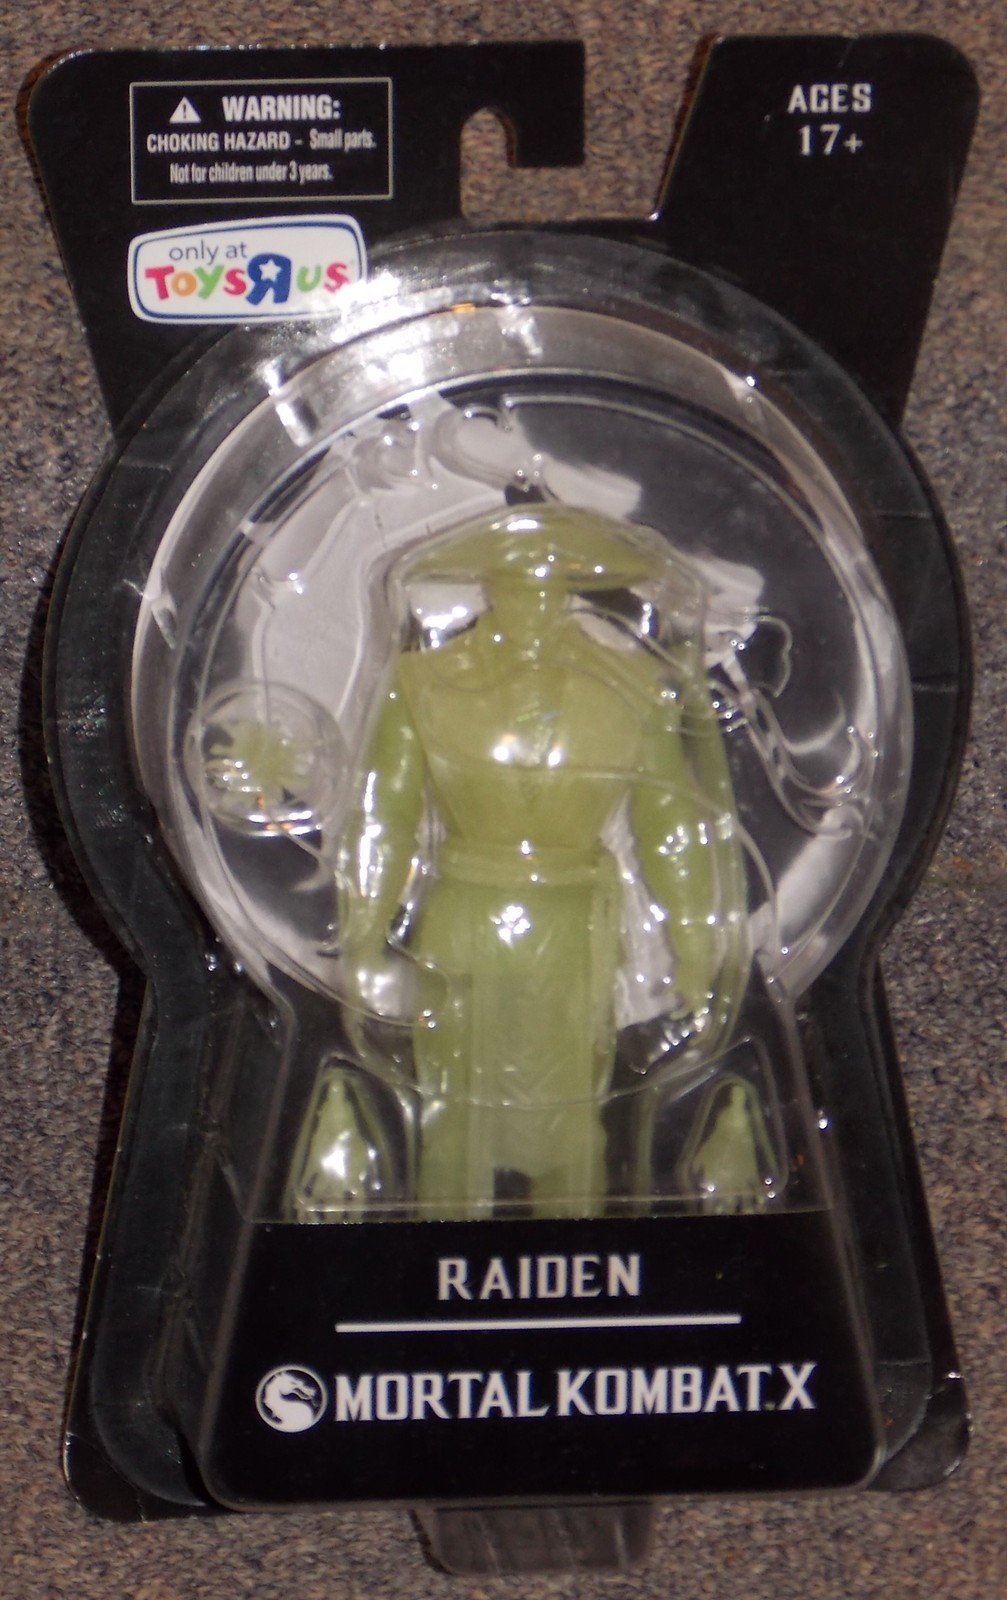 2015 Mortal Kombat X Raiden San Diego Comic Con Exclusive Figure New In Package - $39.99